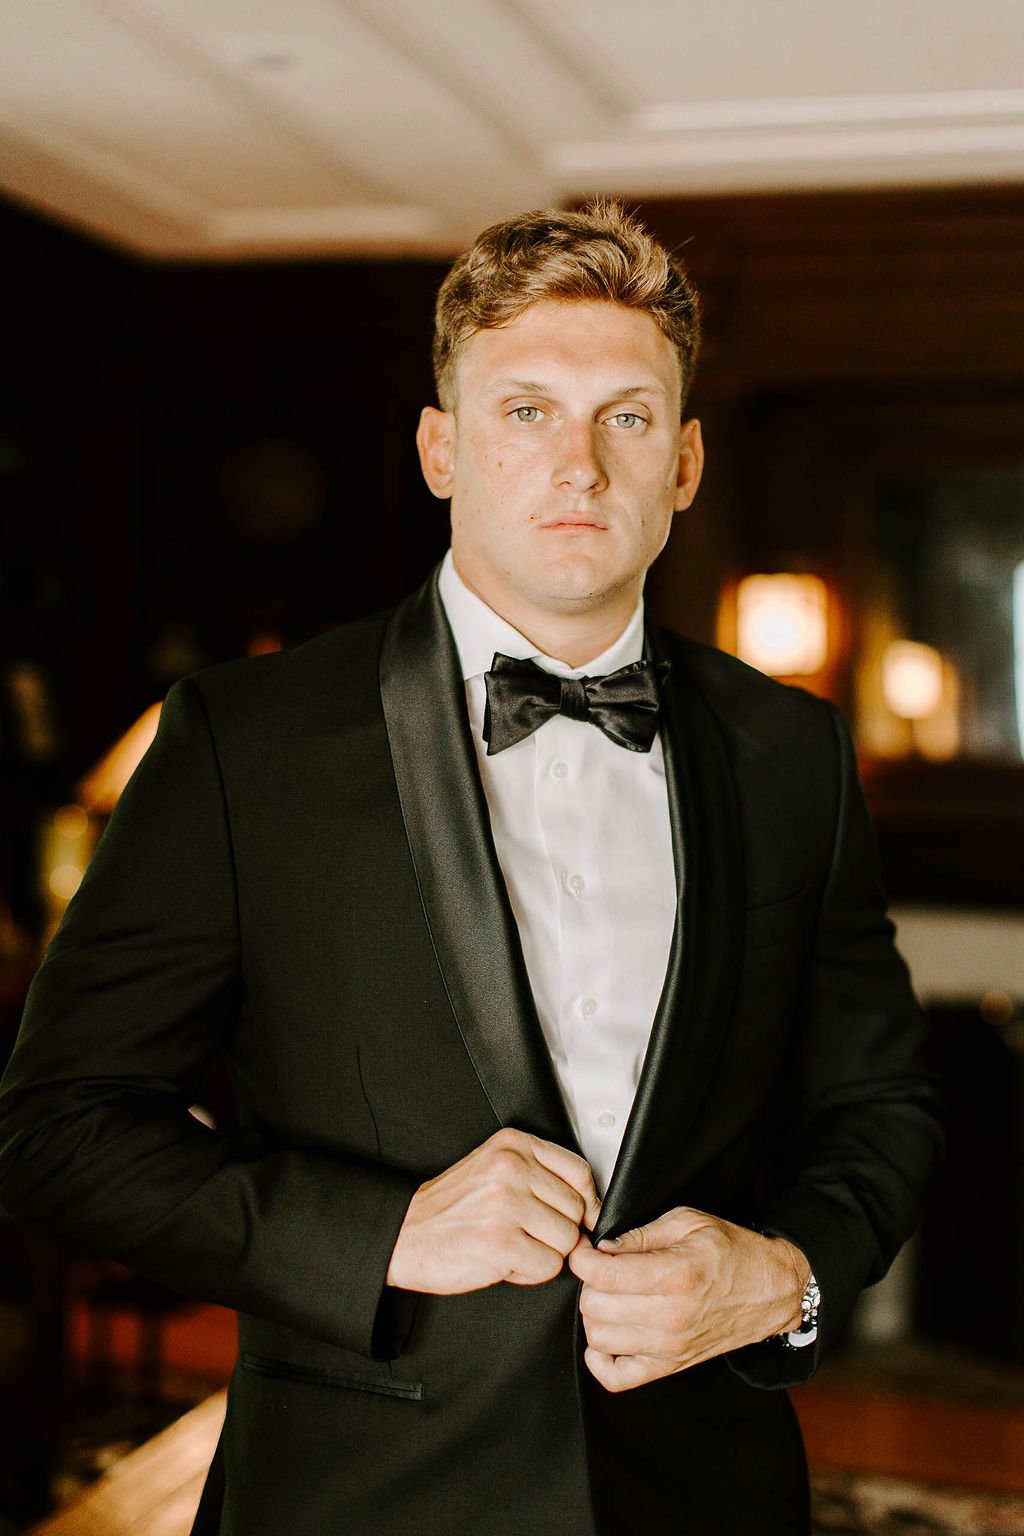 Groom posing in black suite and bow tie